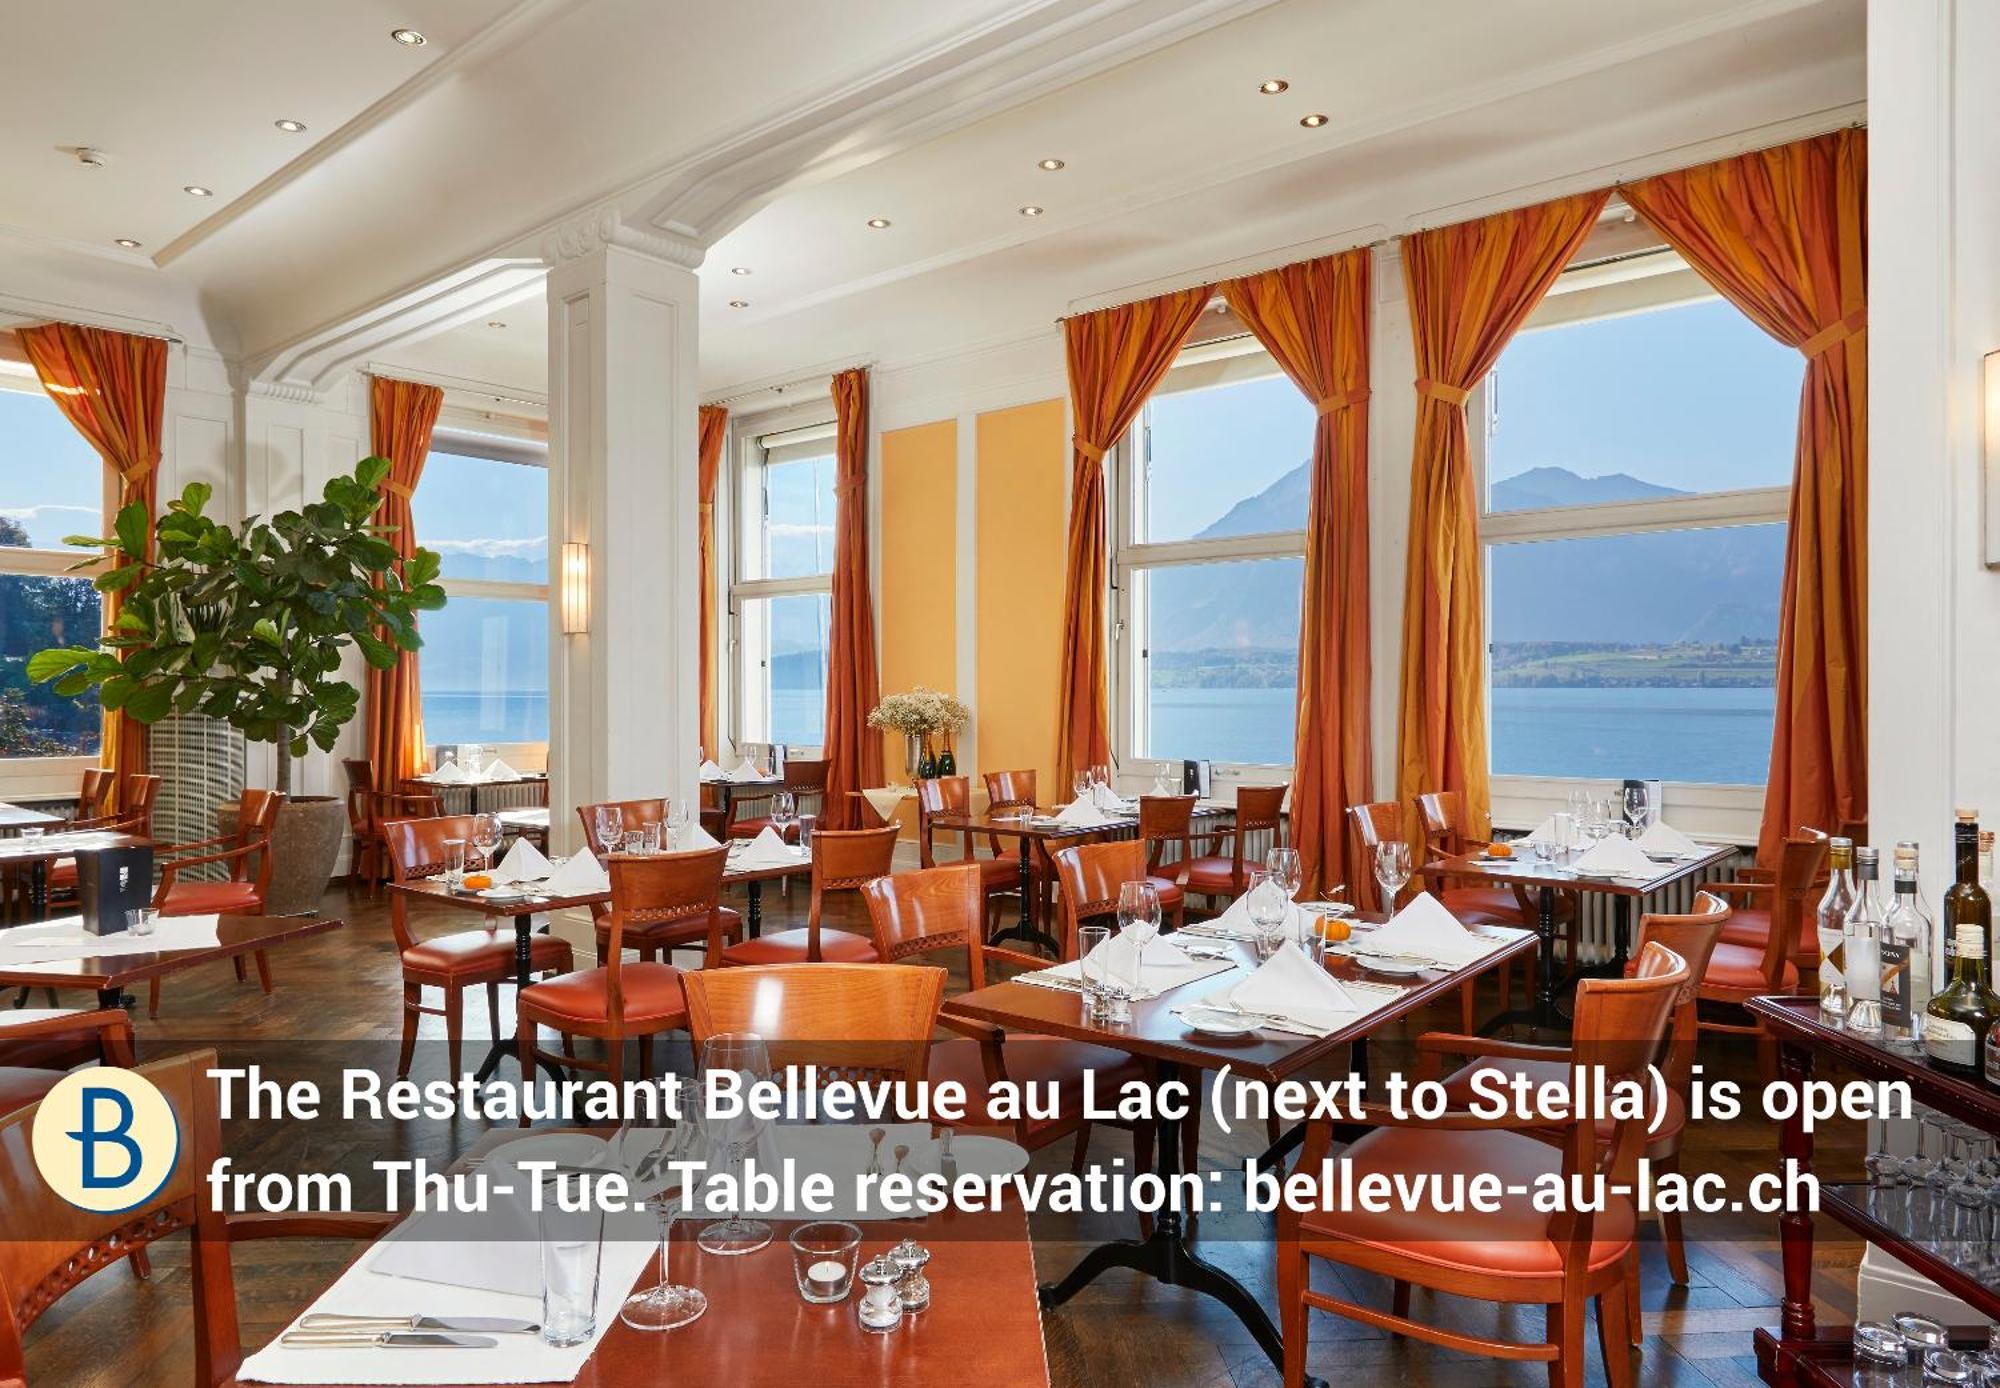 Dependance Stella Del Lago By Hotel Restaurant Bellevue Au Lac 图恩 外观 照片